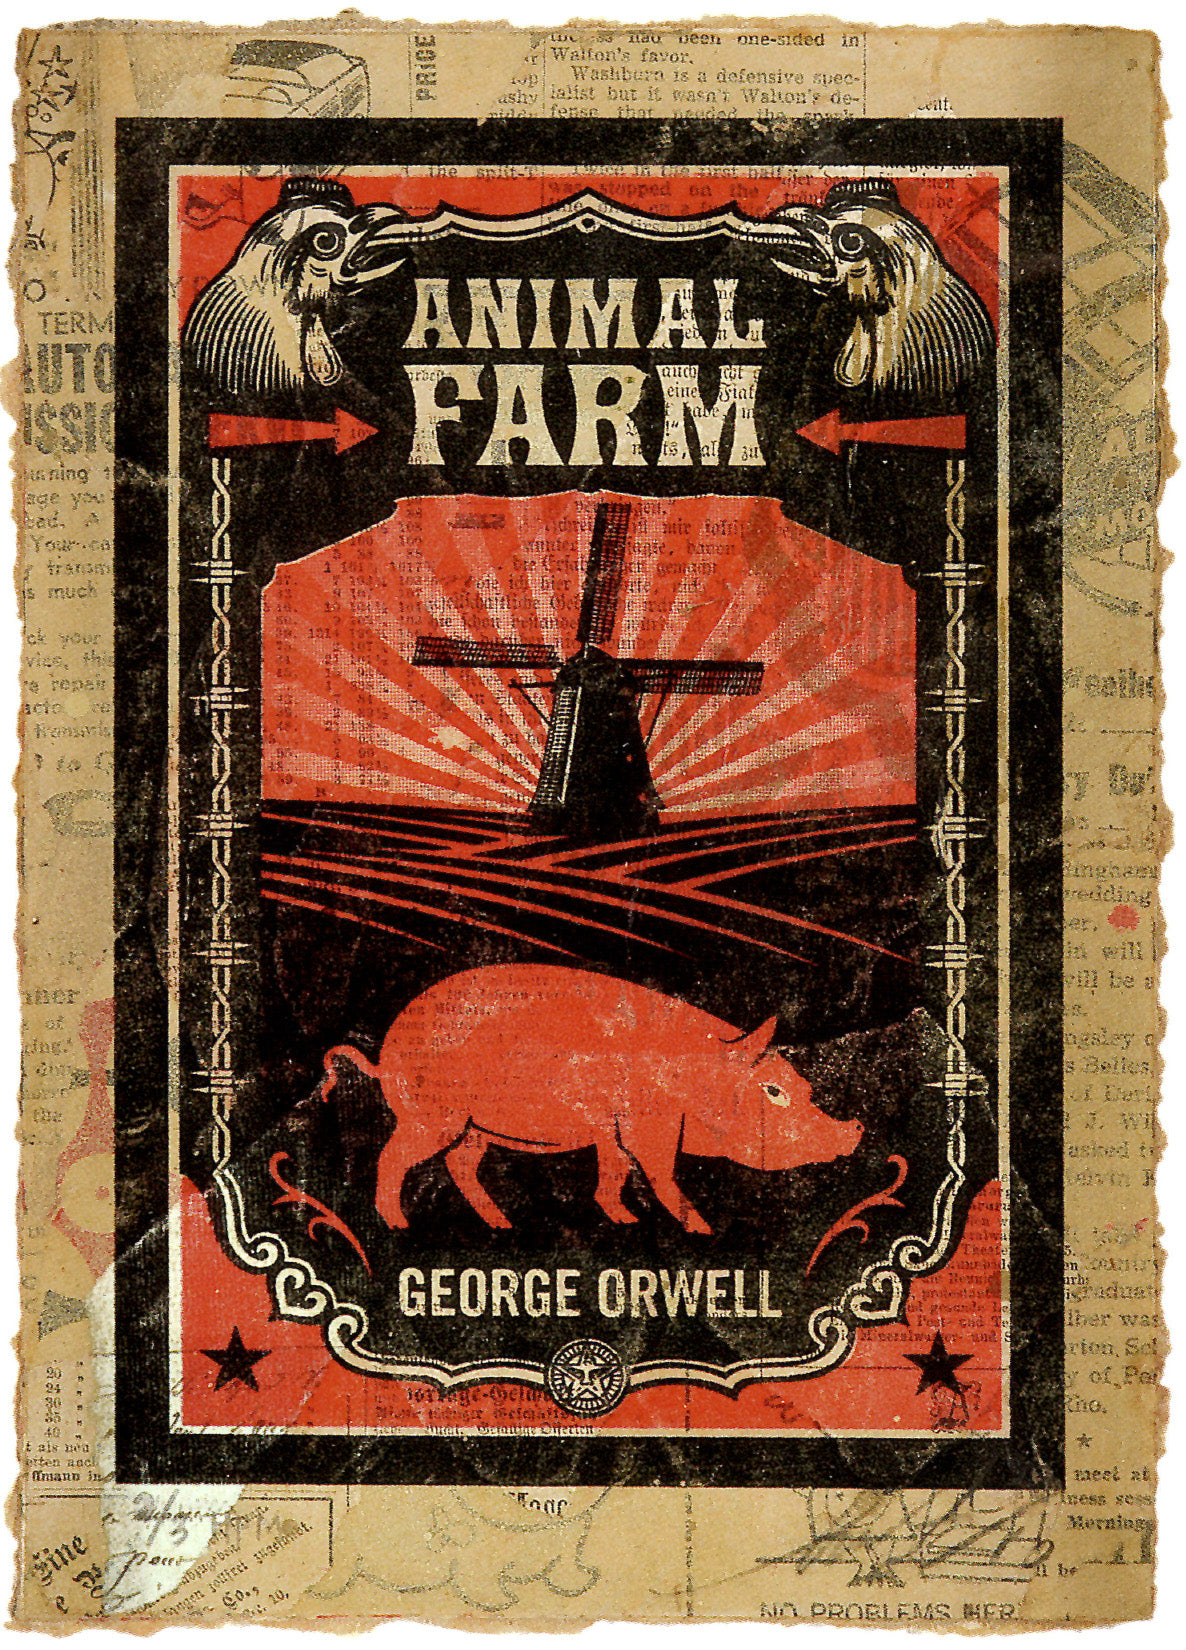 ABOUT EDWARD KURSTAK George Orwell's Animal Farm by Frank Shepard Fairey (Obey)